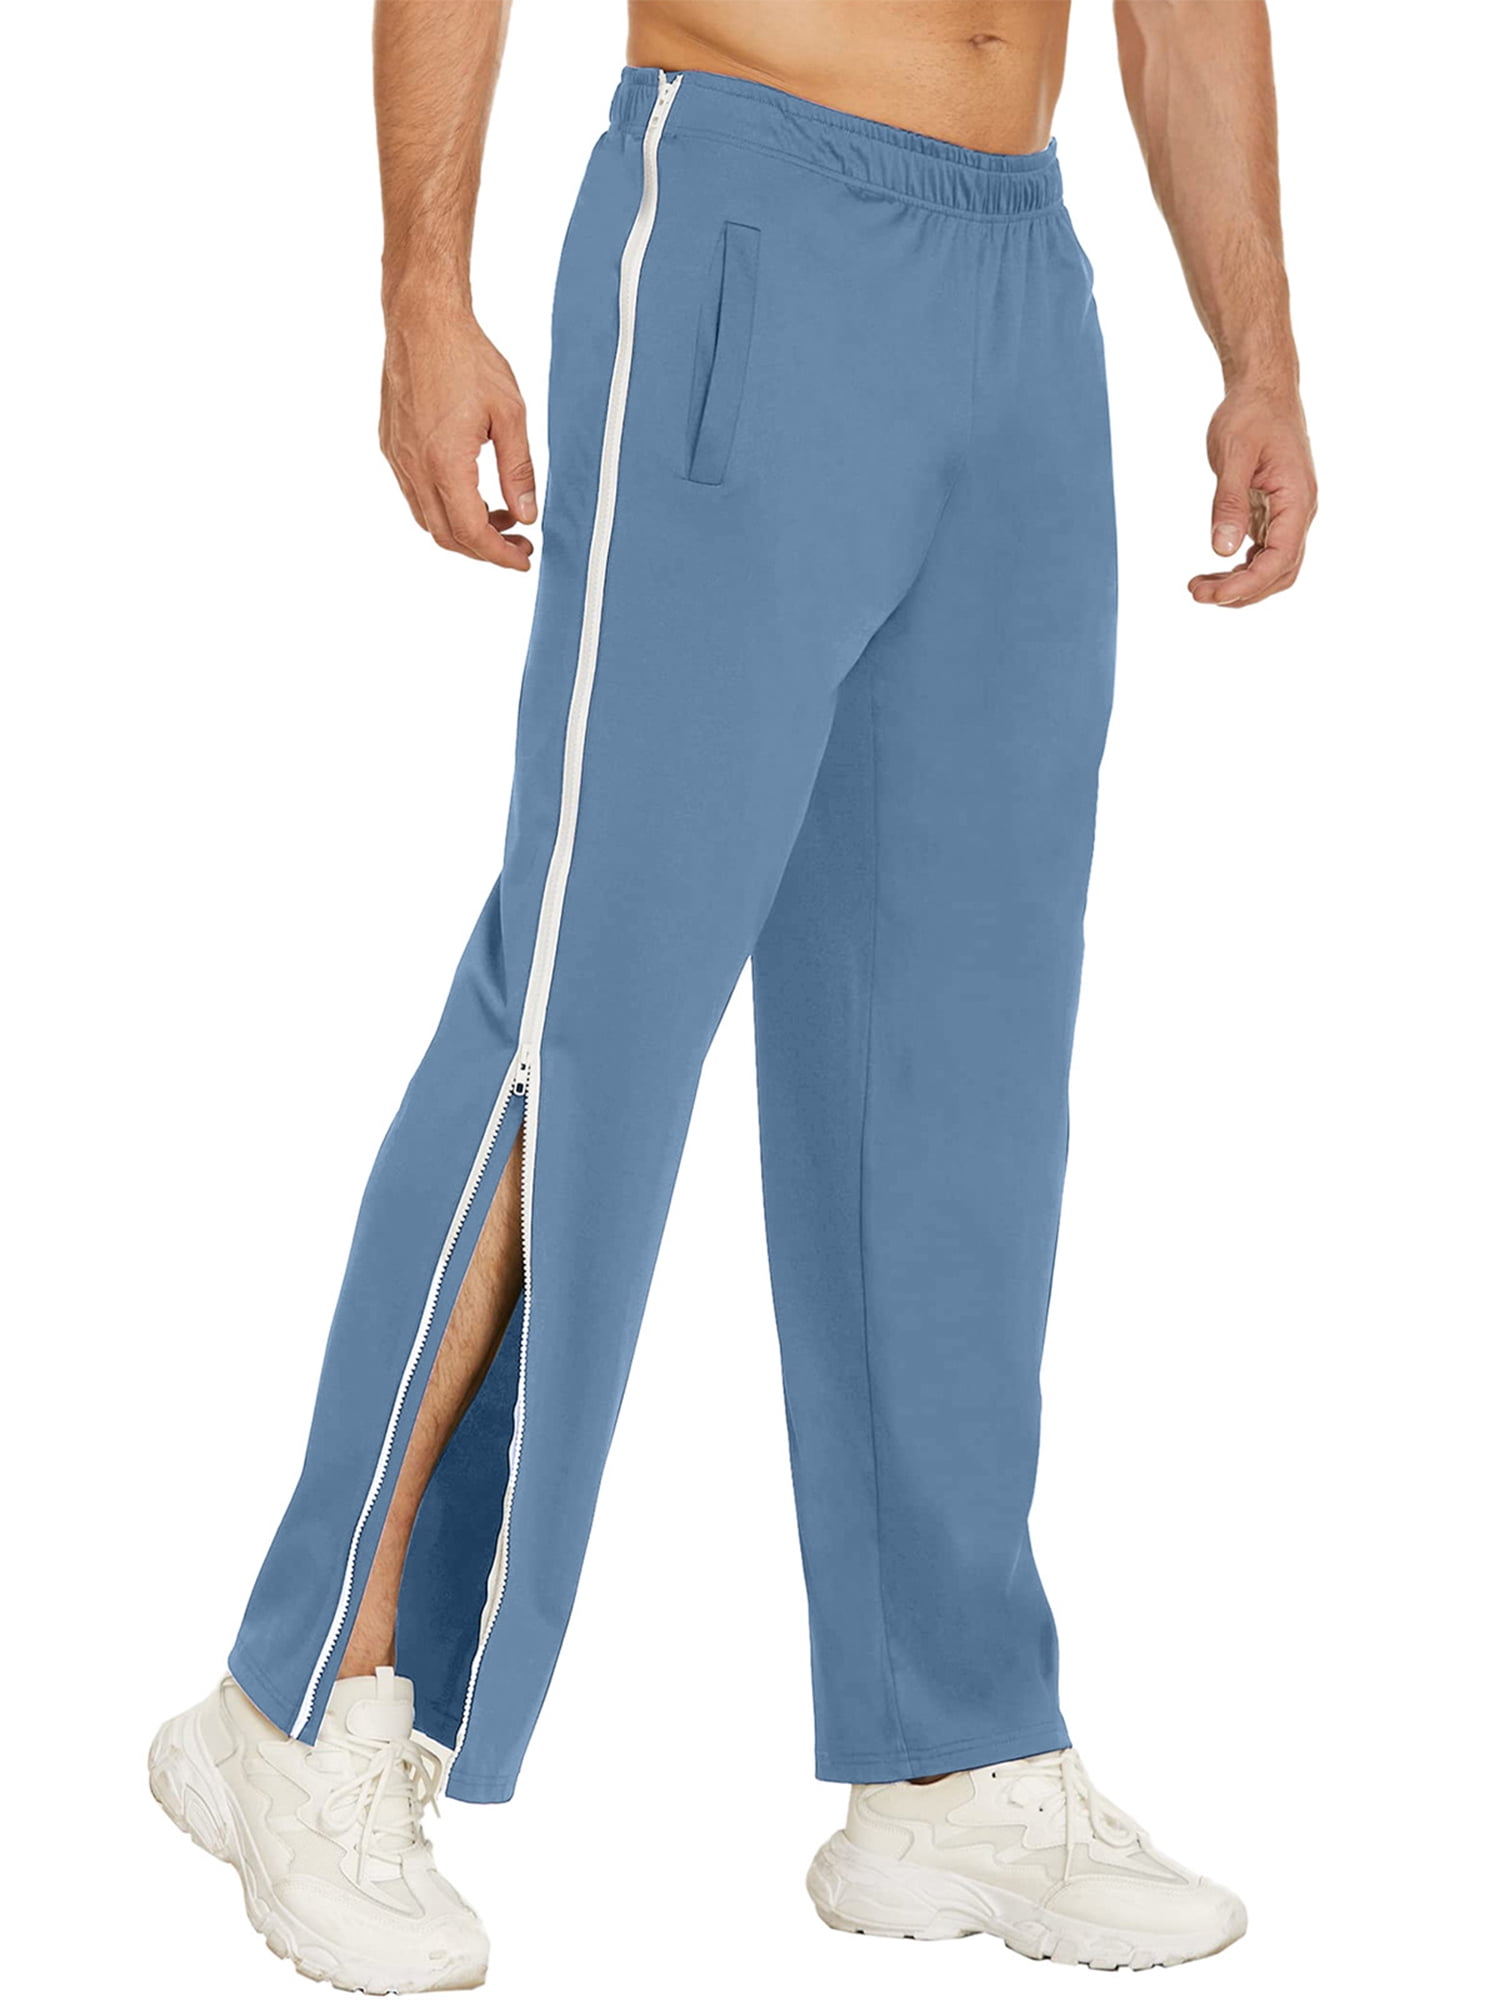 Amazon.com: Adidas Tearaway Pants